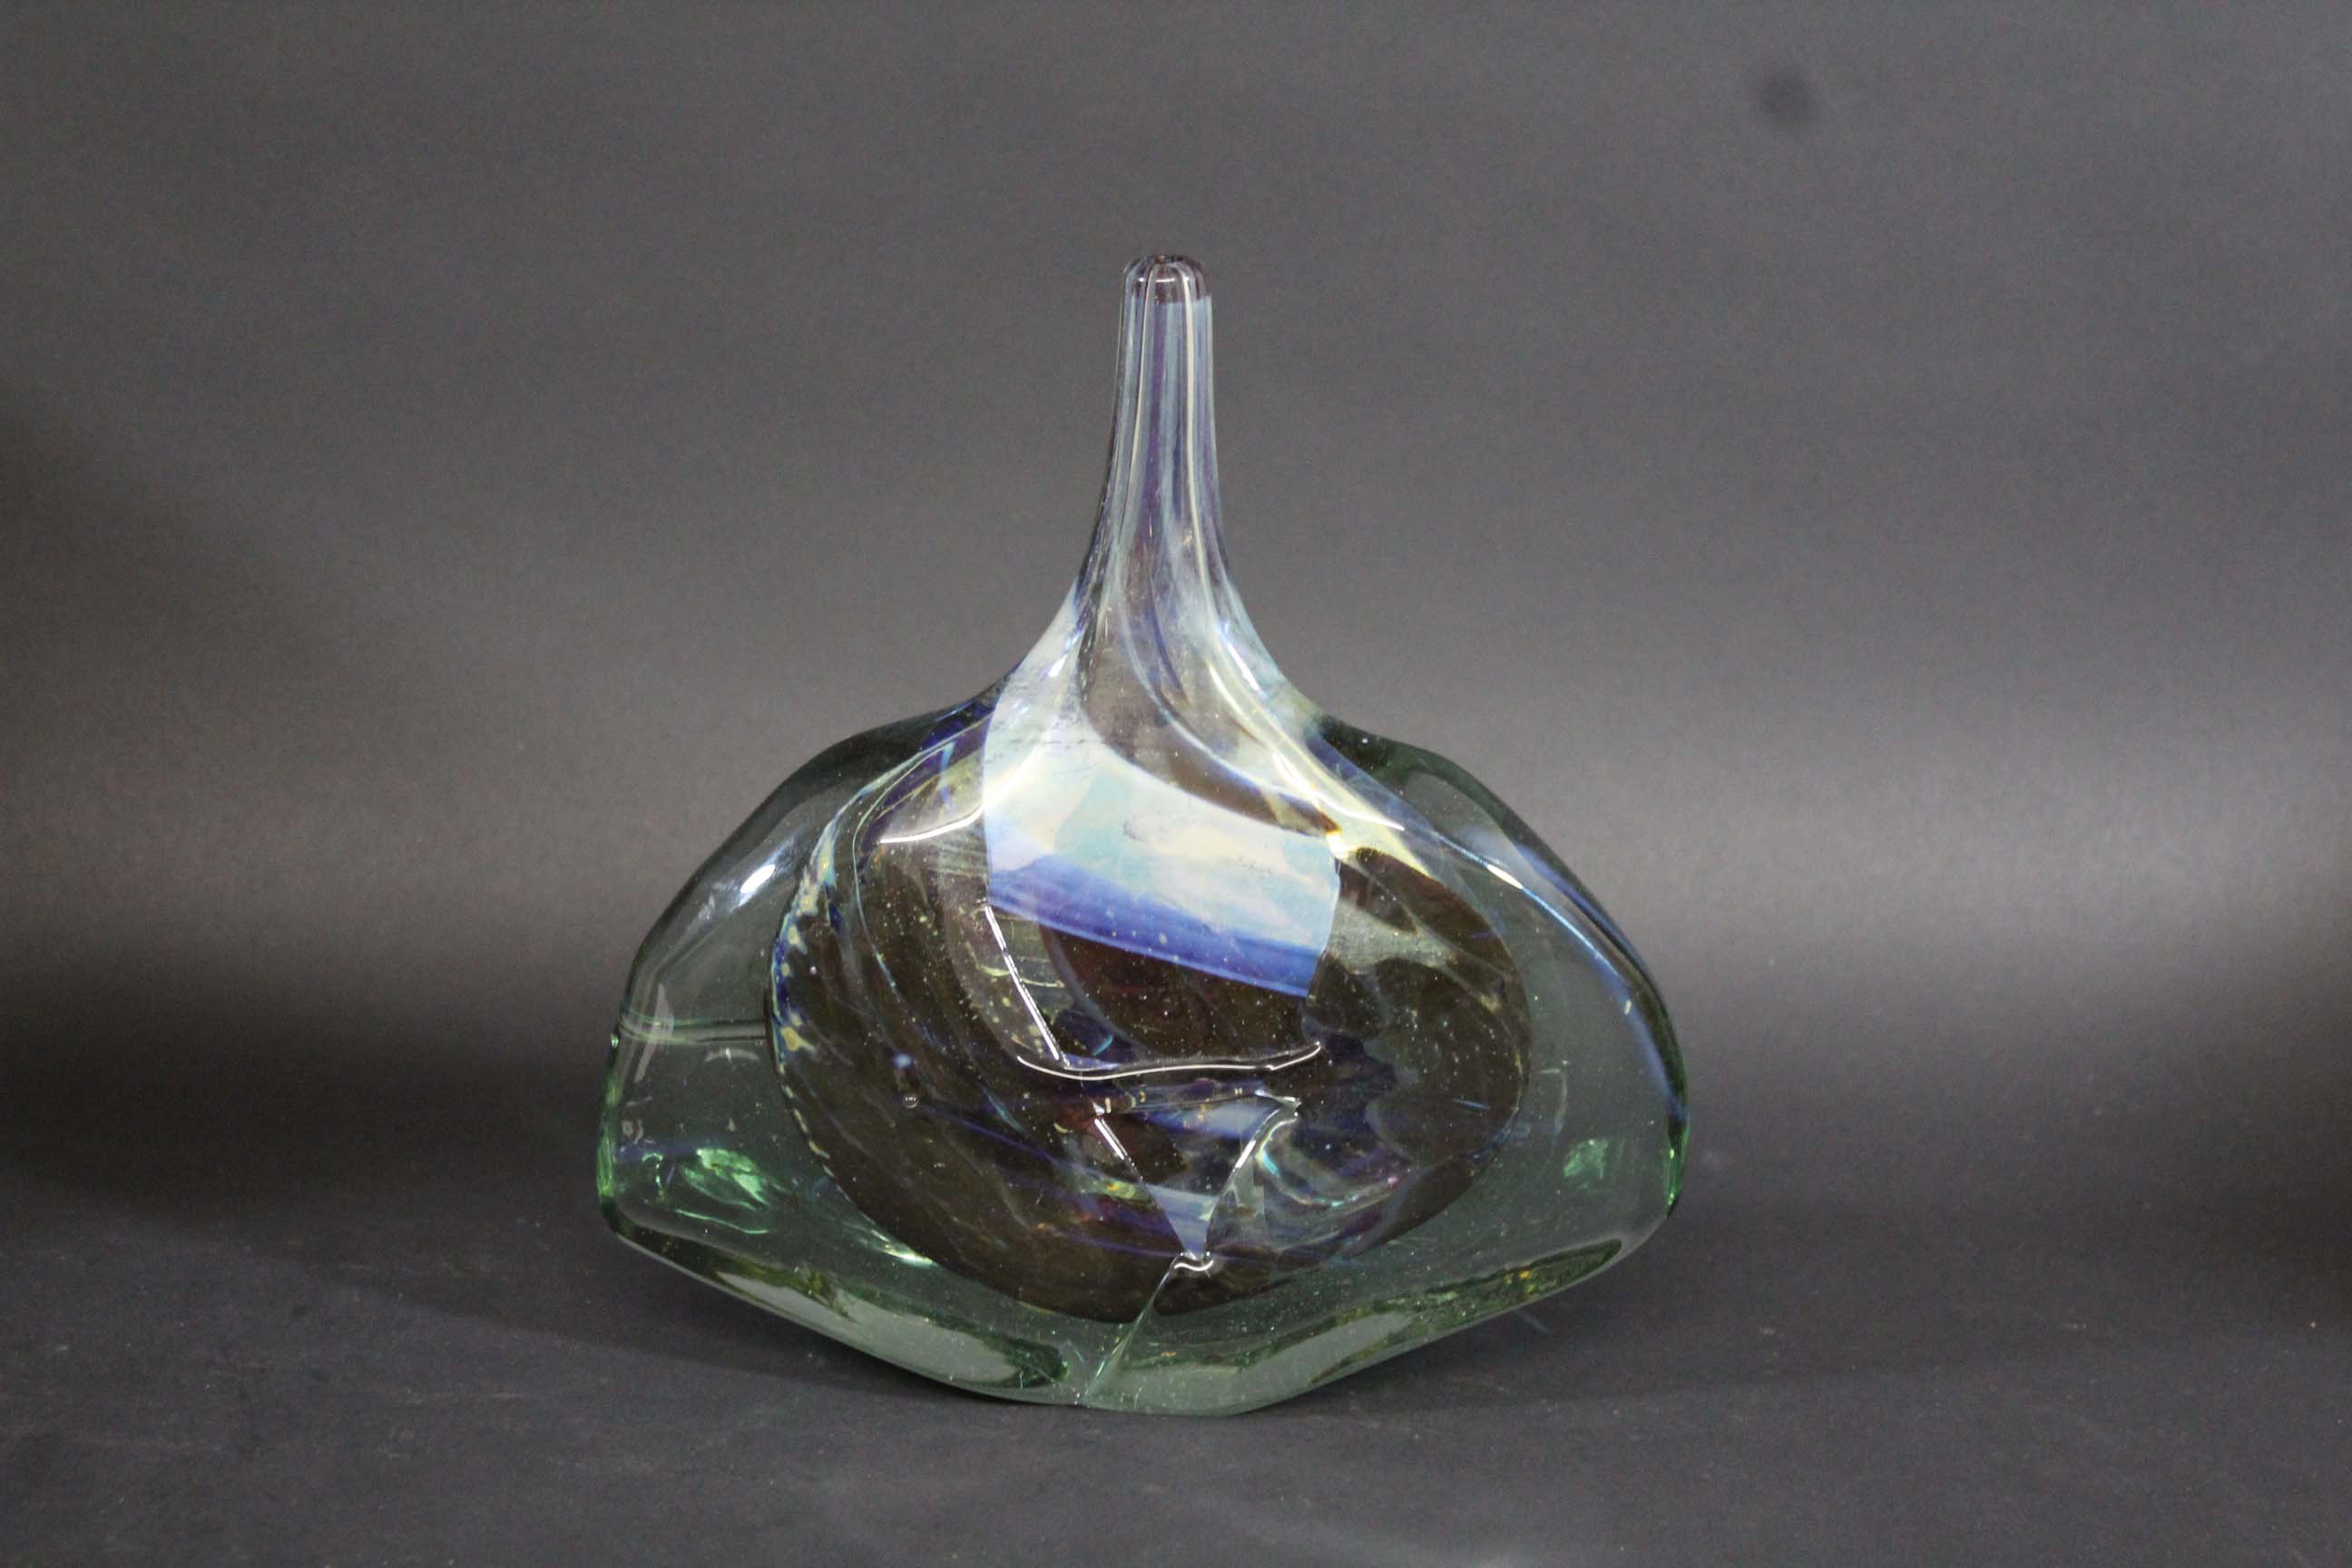 MDINA GLASS VASE - AXE HEAD a Mdina glass vase in the Axe Head design, with internal decoration